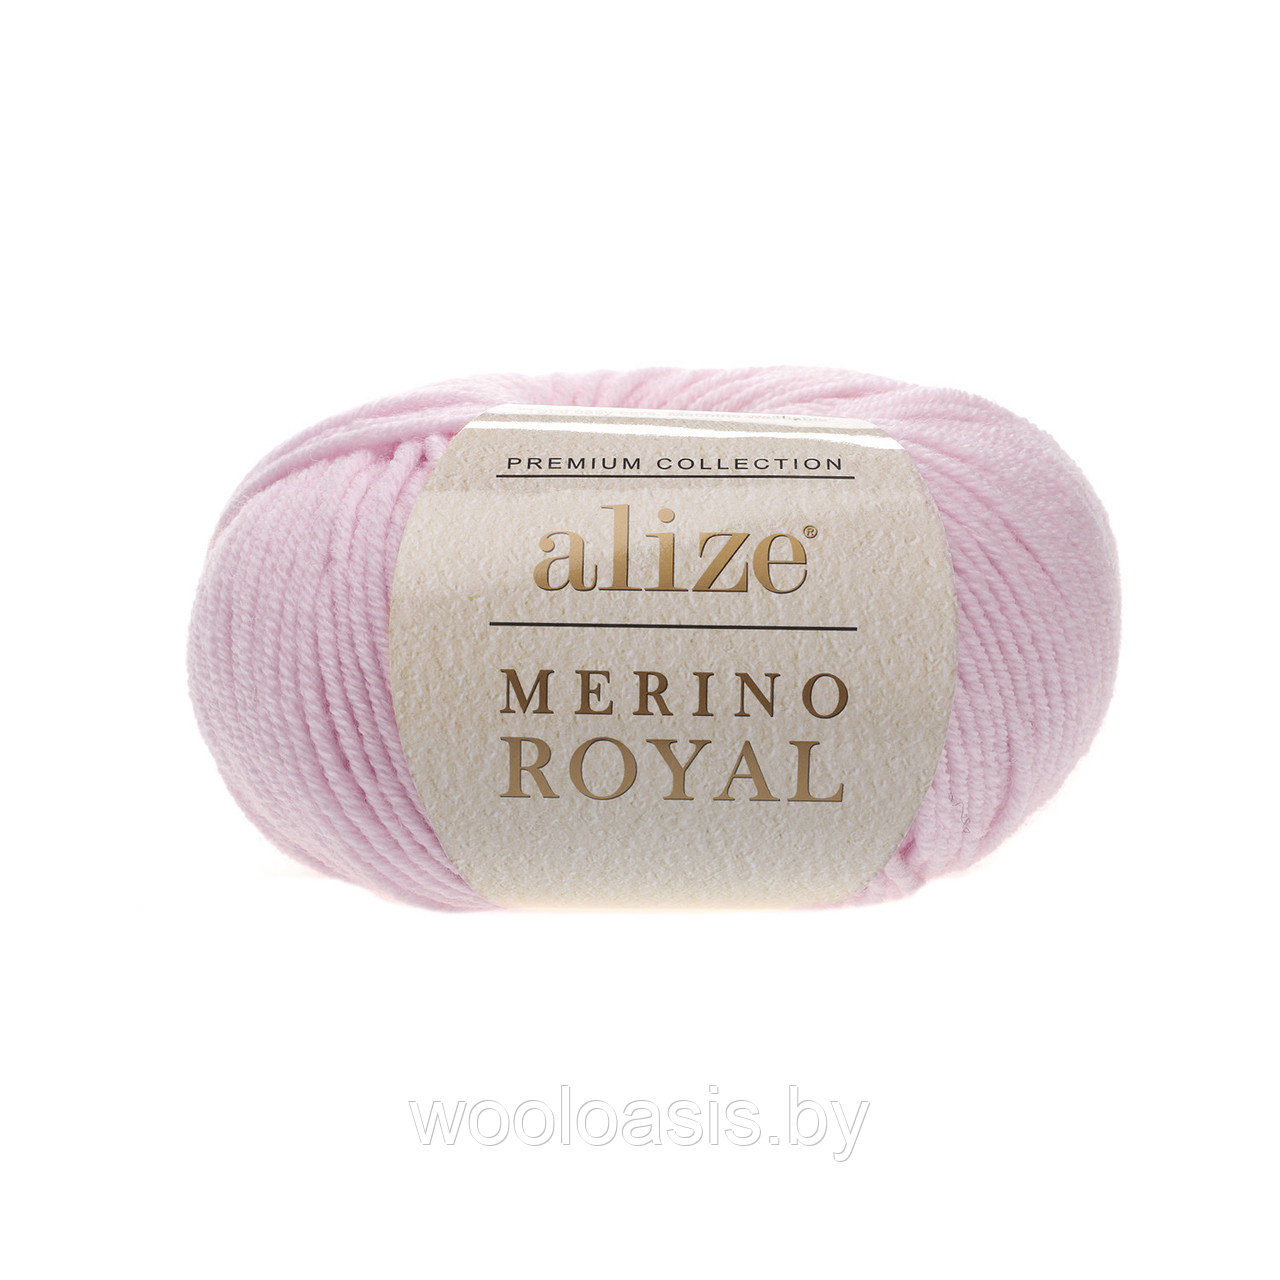 Пряжа Alize Merino Royal, Ализе Мерино Роял, турецкая, 100% шерстяная, для ручного вязания, моток 50г, 100м. (цвет 31)